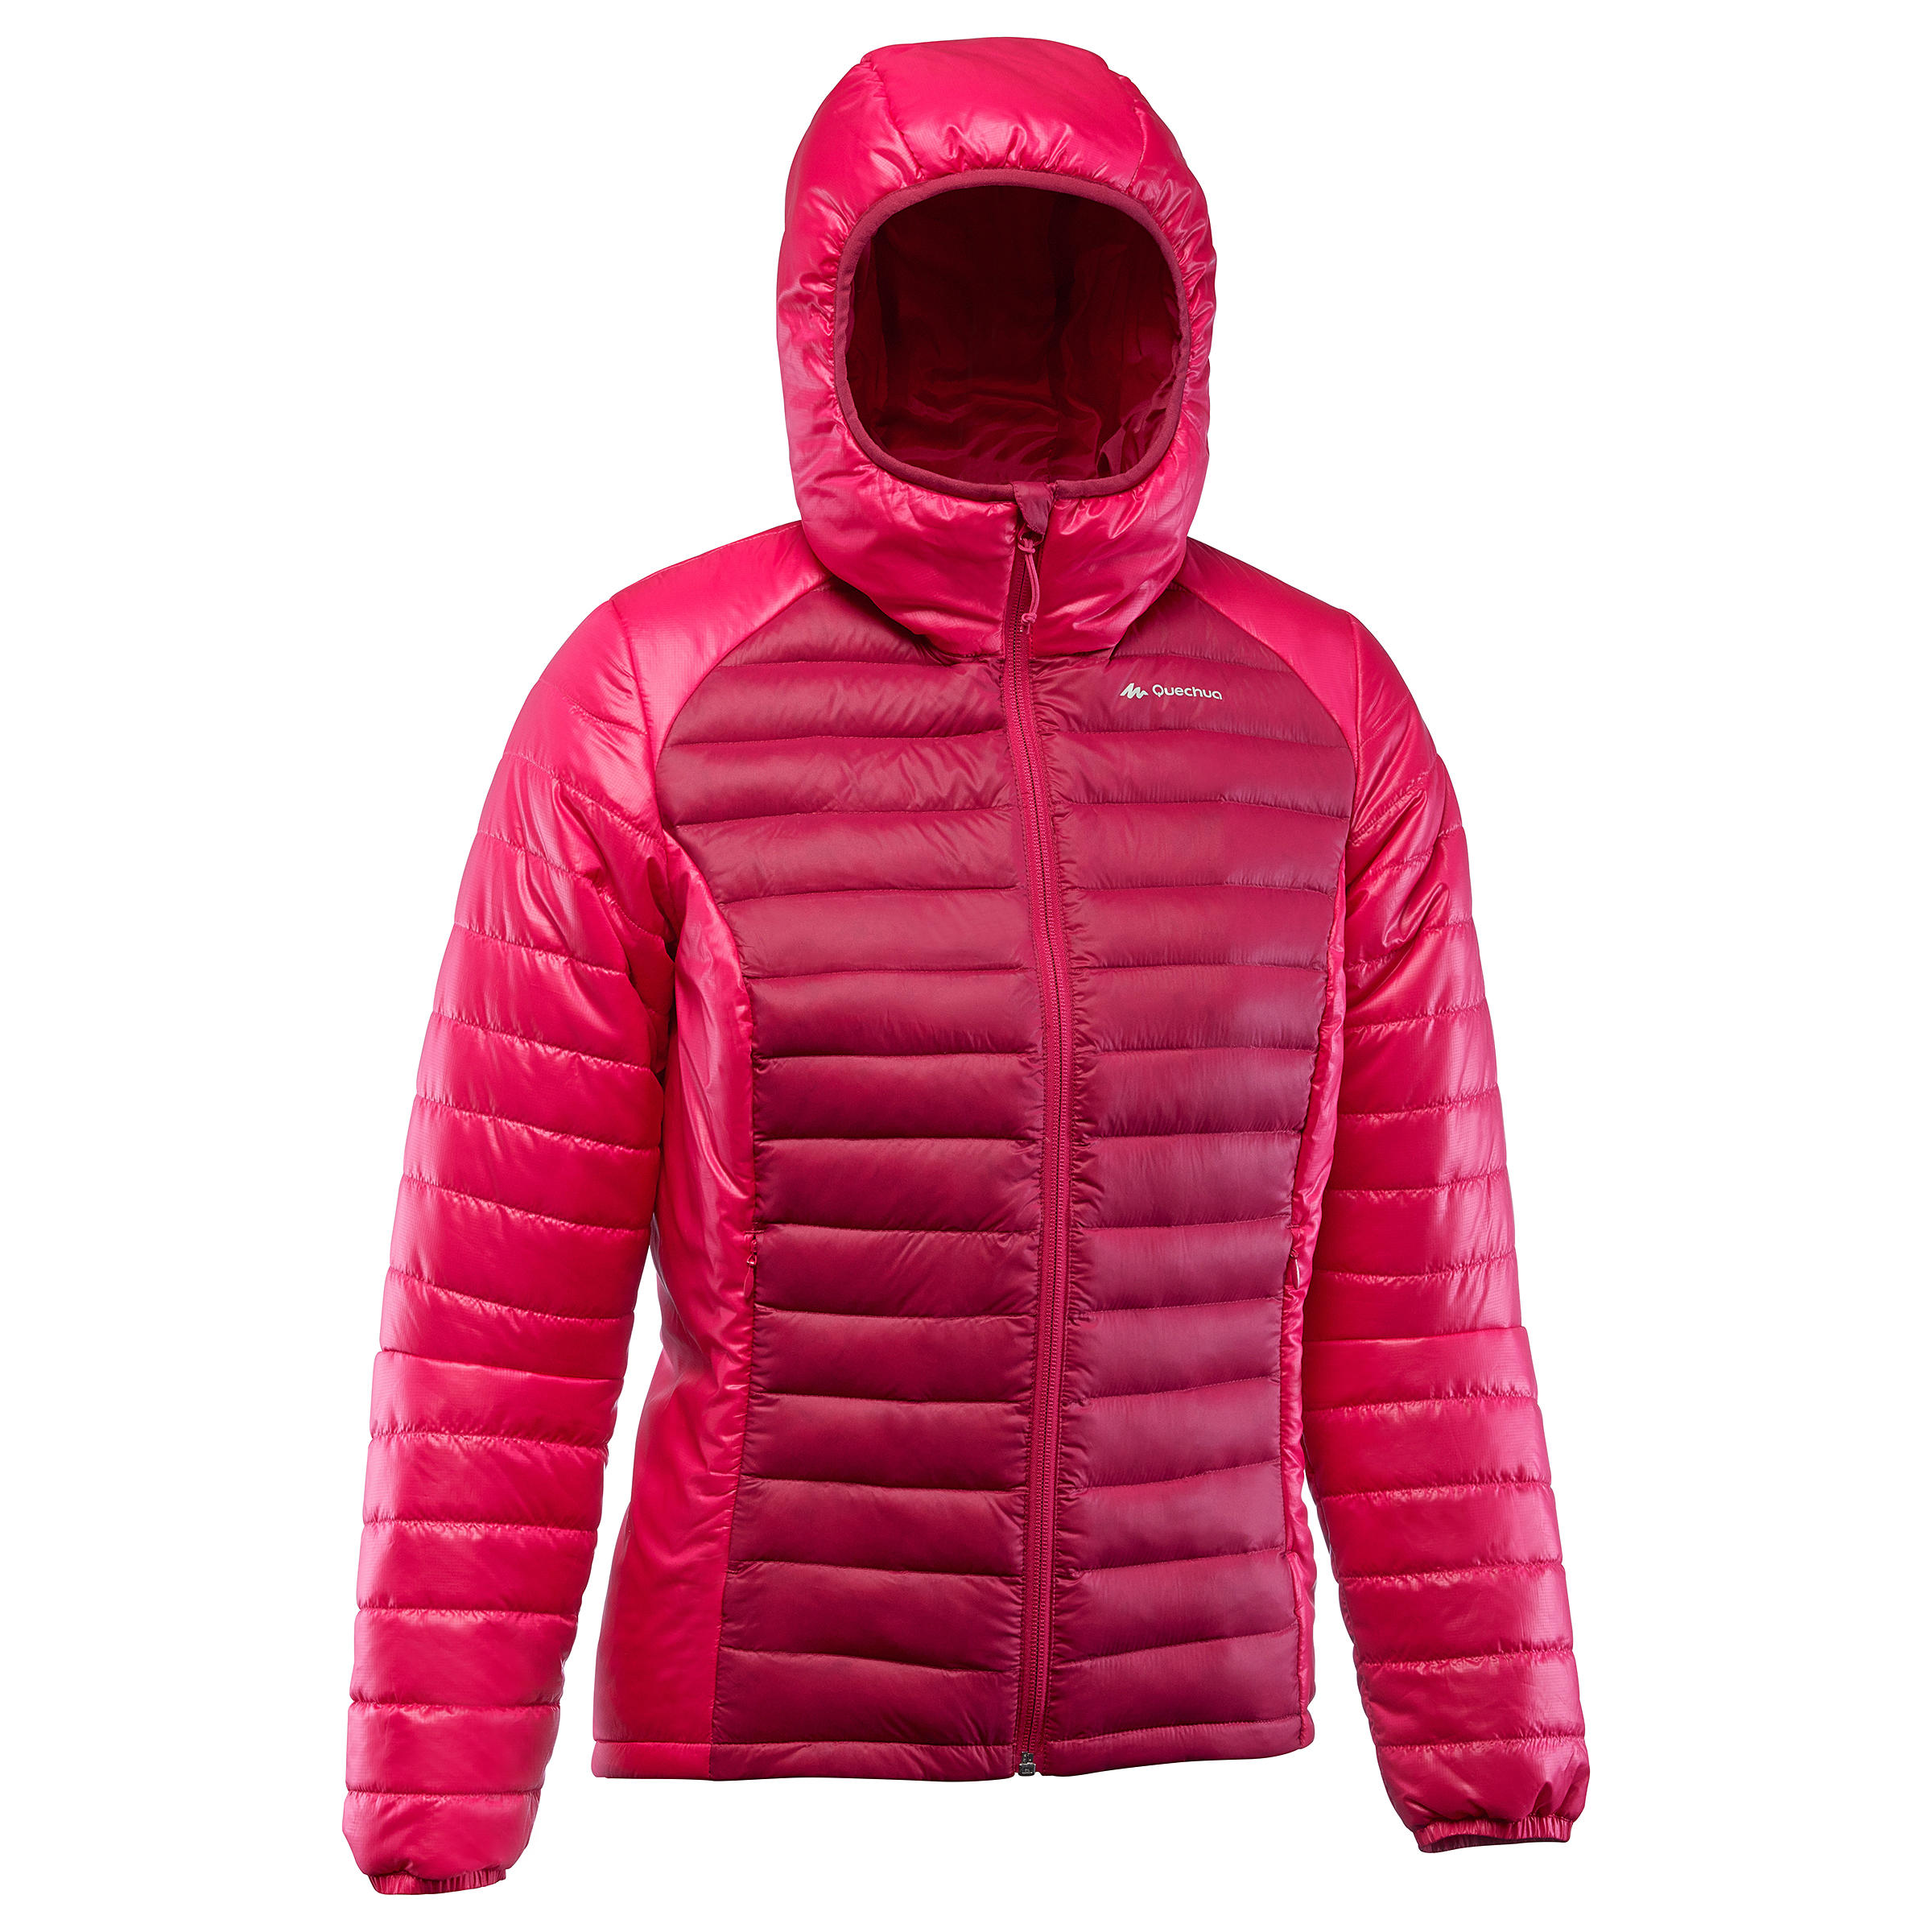 X-Light 1 Woman's Padded Hiking Jacket - Pink 9/17